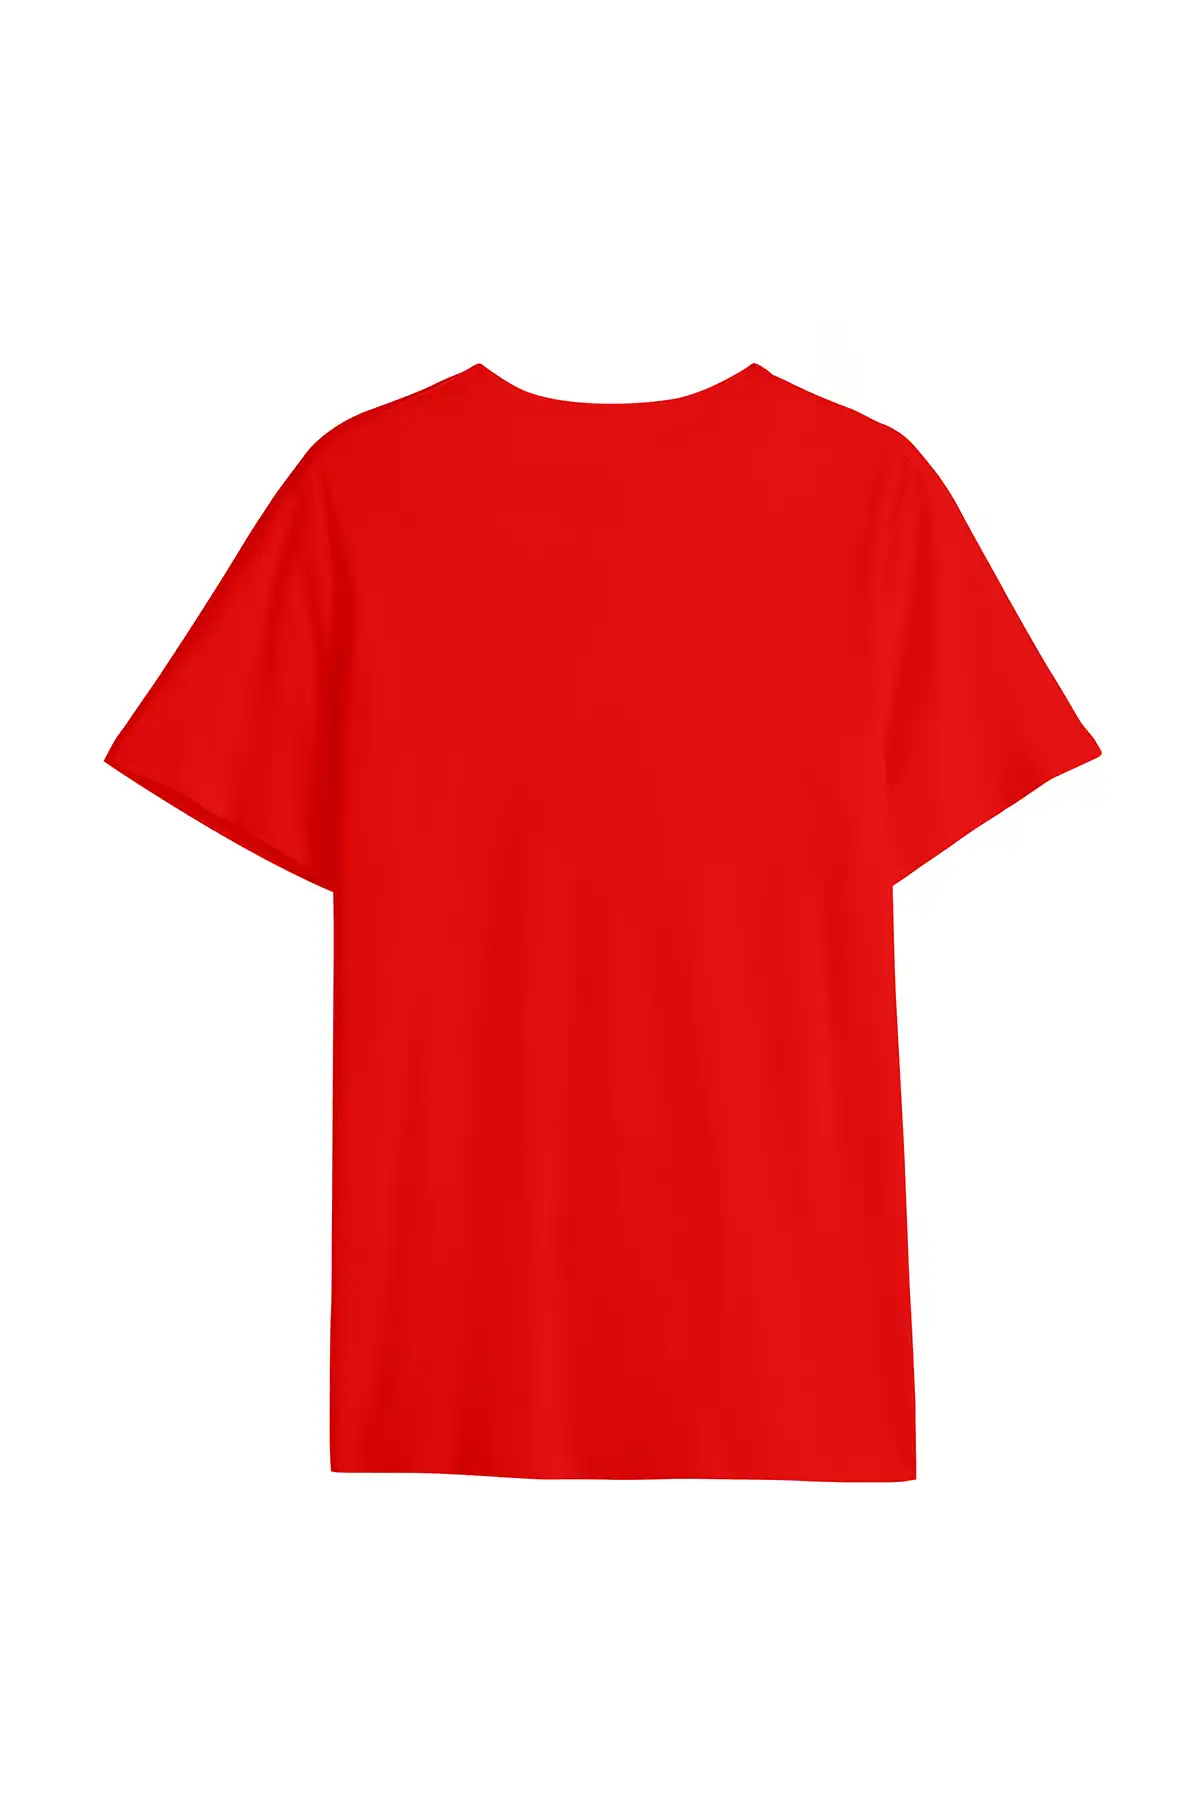 Unisex Crew Neck Cotton T-Shirt - Red